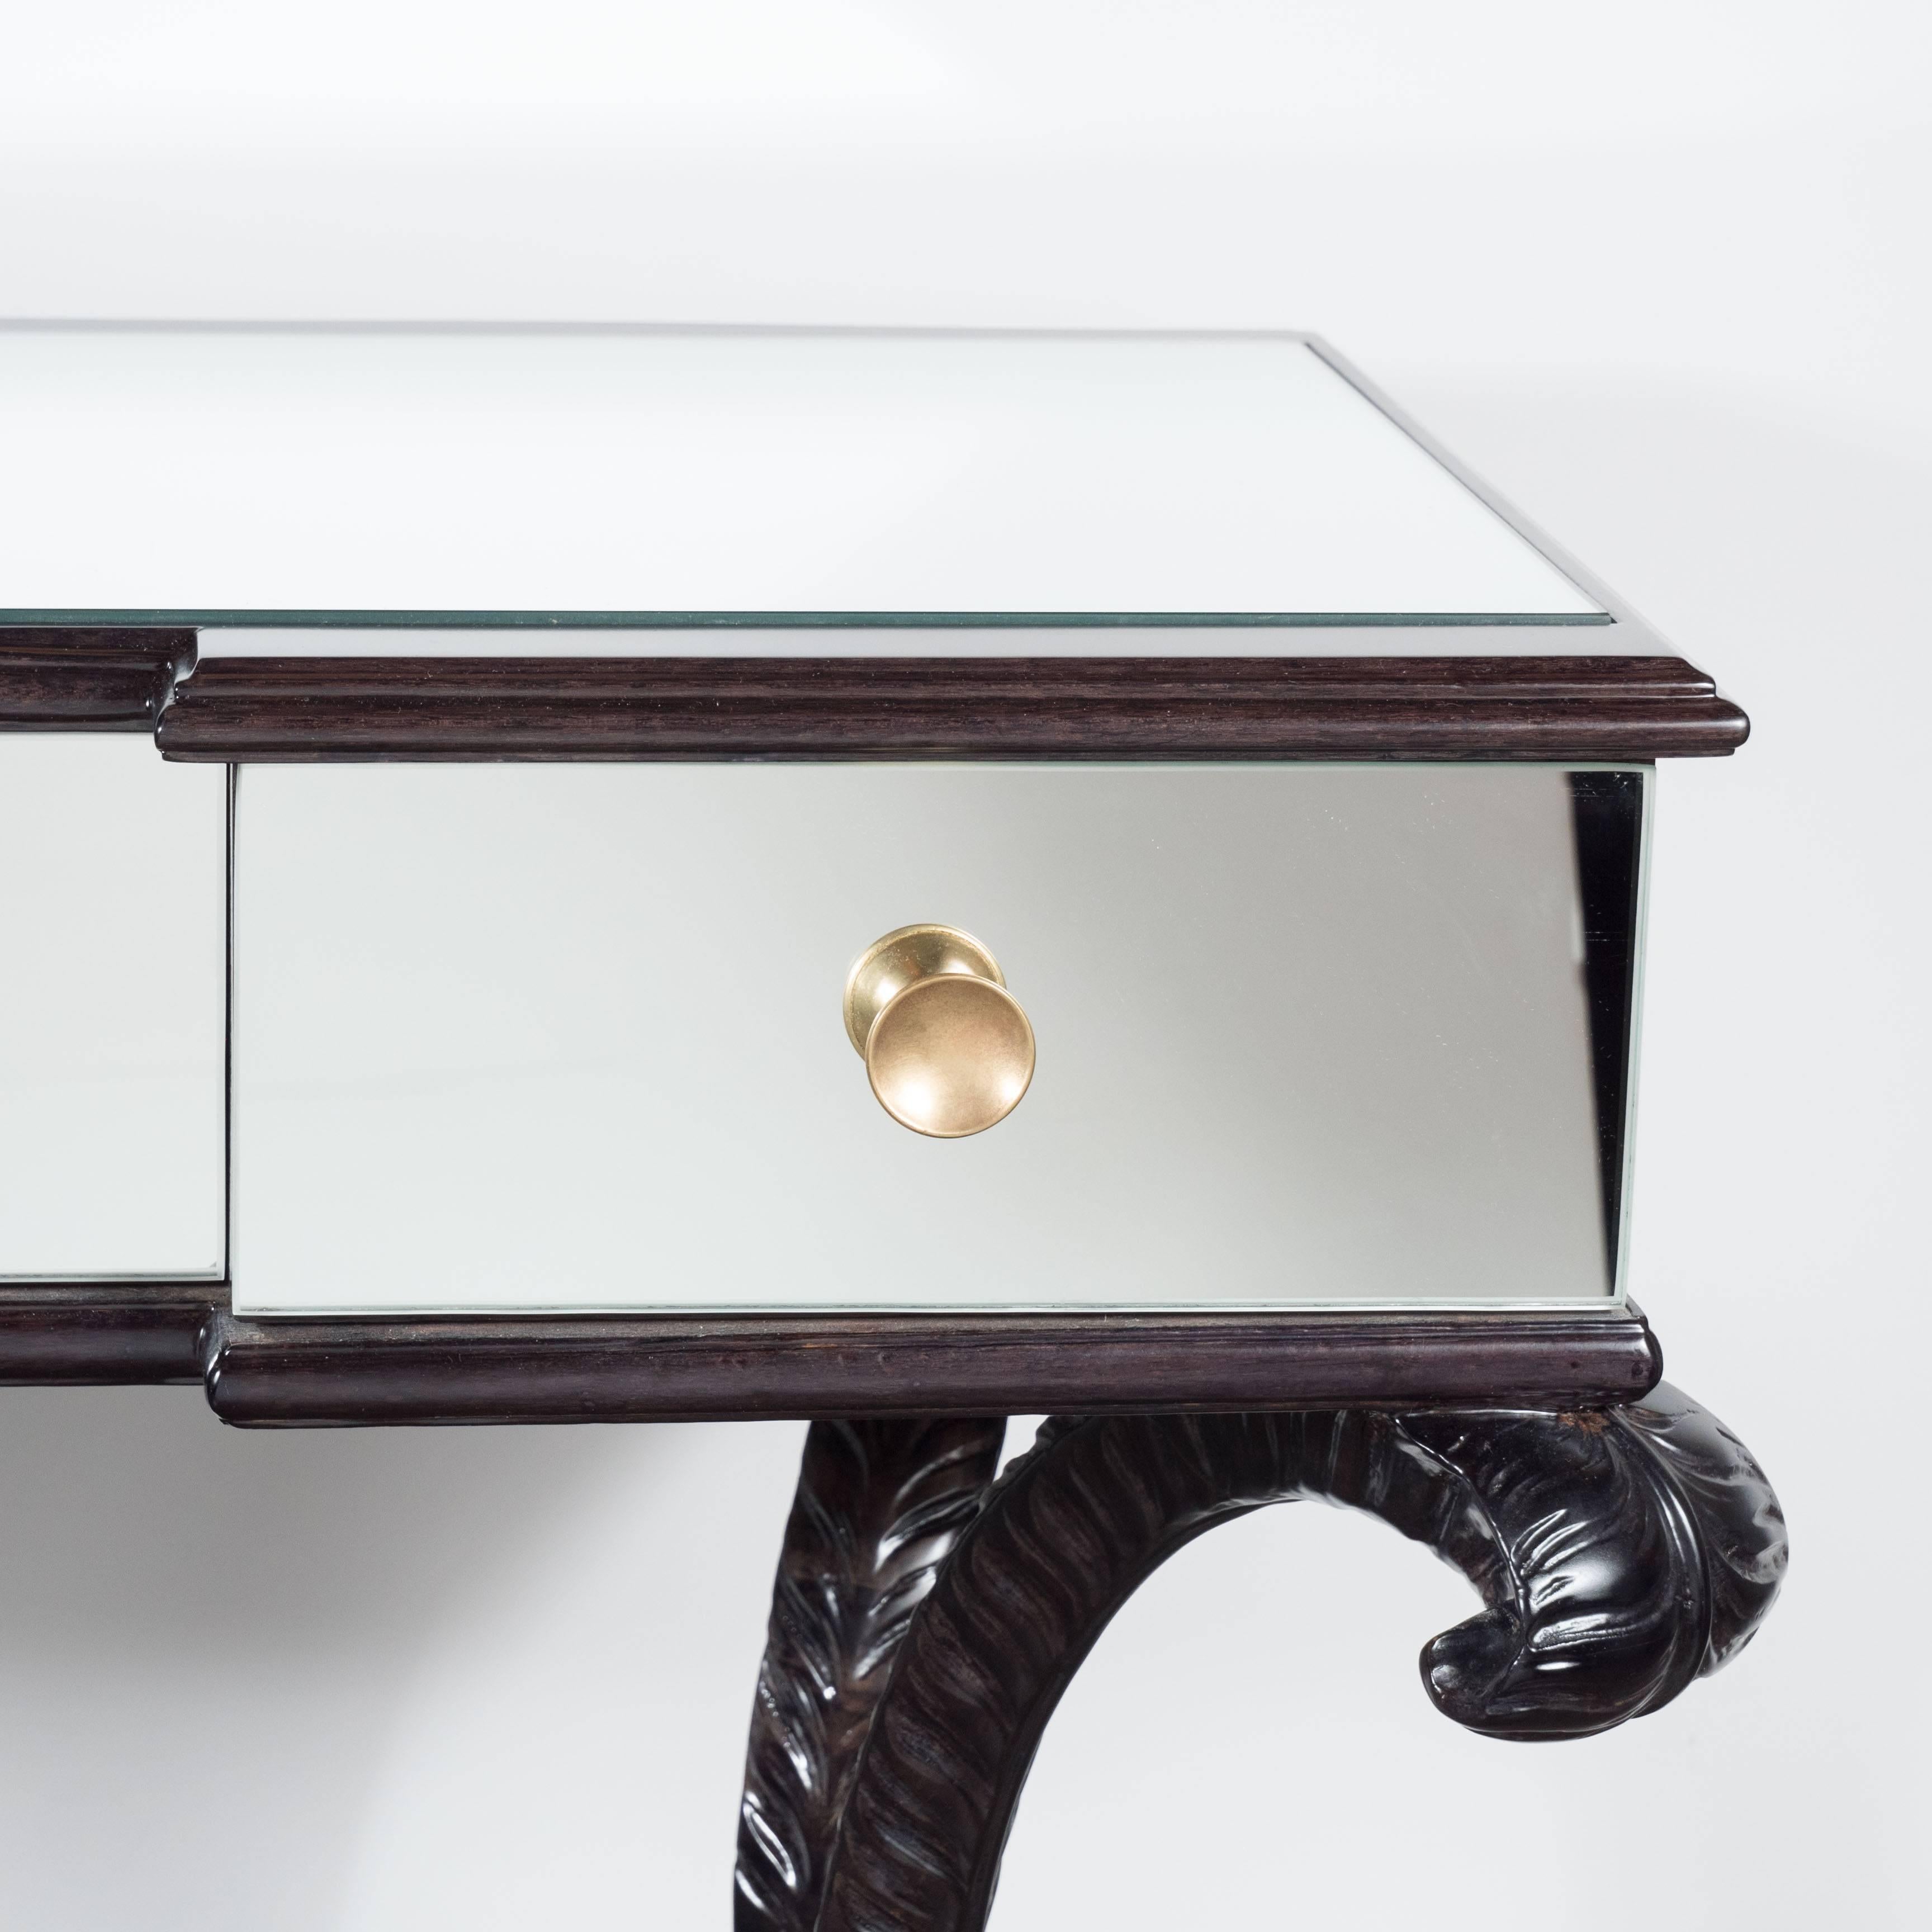 Hollywood Regency Hollywood Mirrored Desk or Vanity by Grosfeld House in Ebonized Walnut and Brass